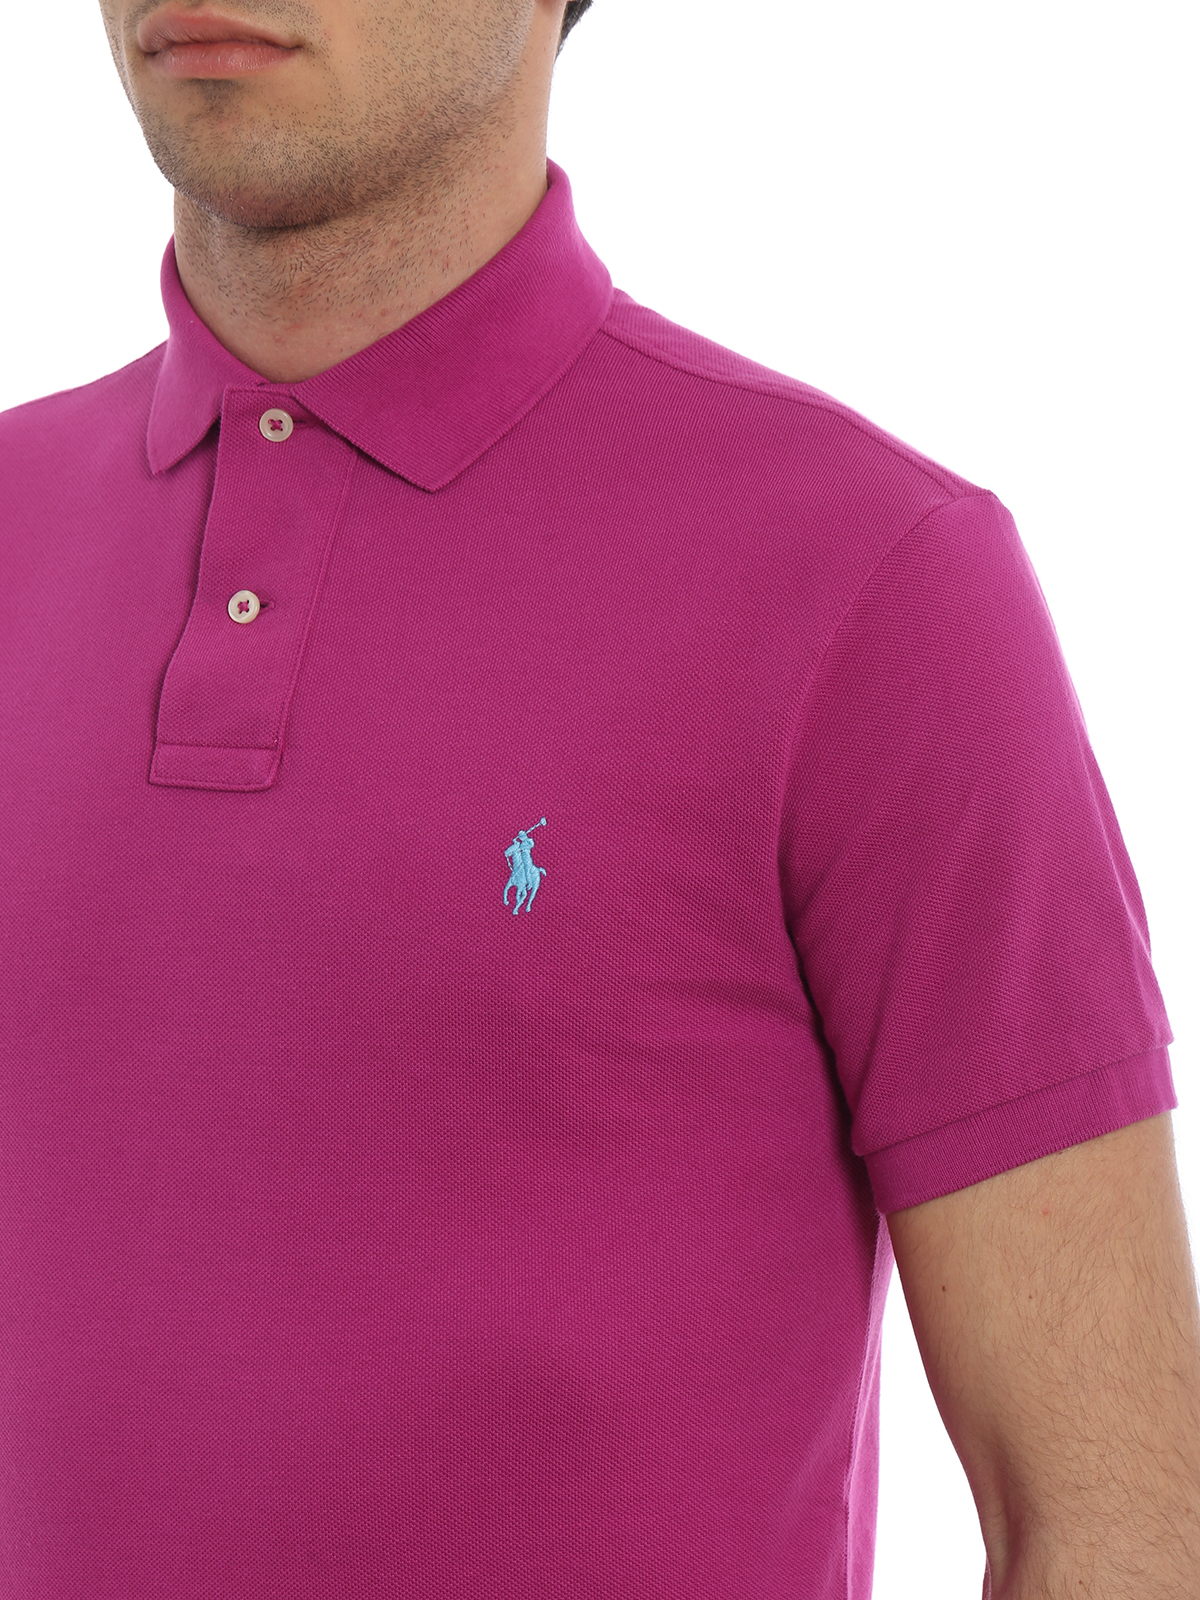 Polo shirts Polo Ralph Lauren - Classic purple polo shirt in pique cotton -  710536856172